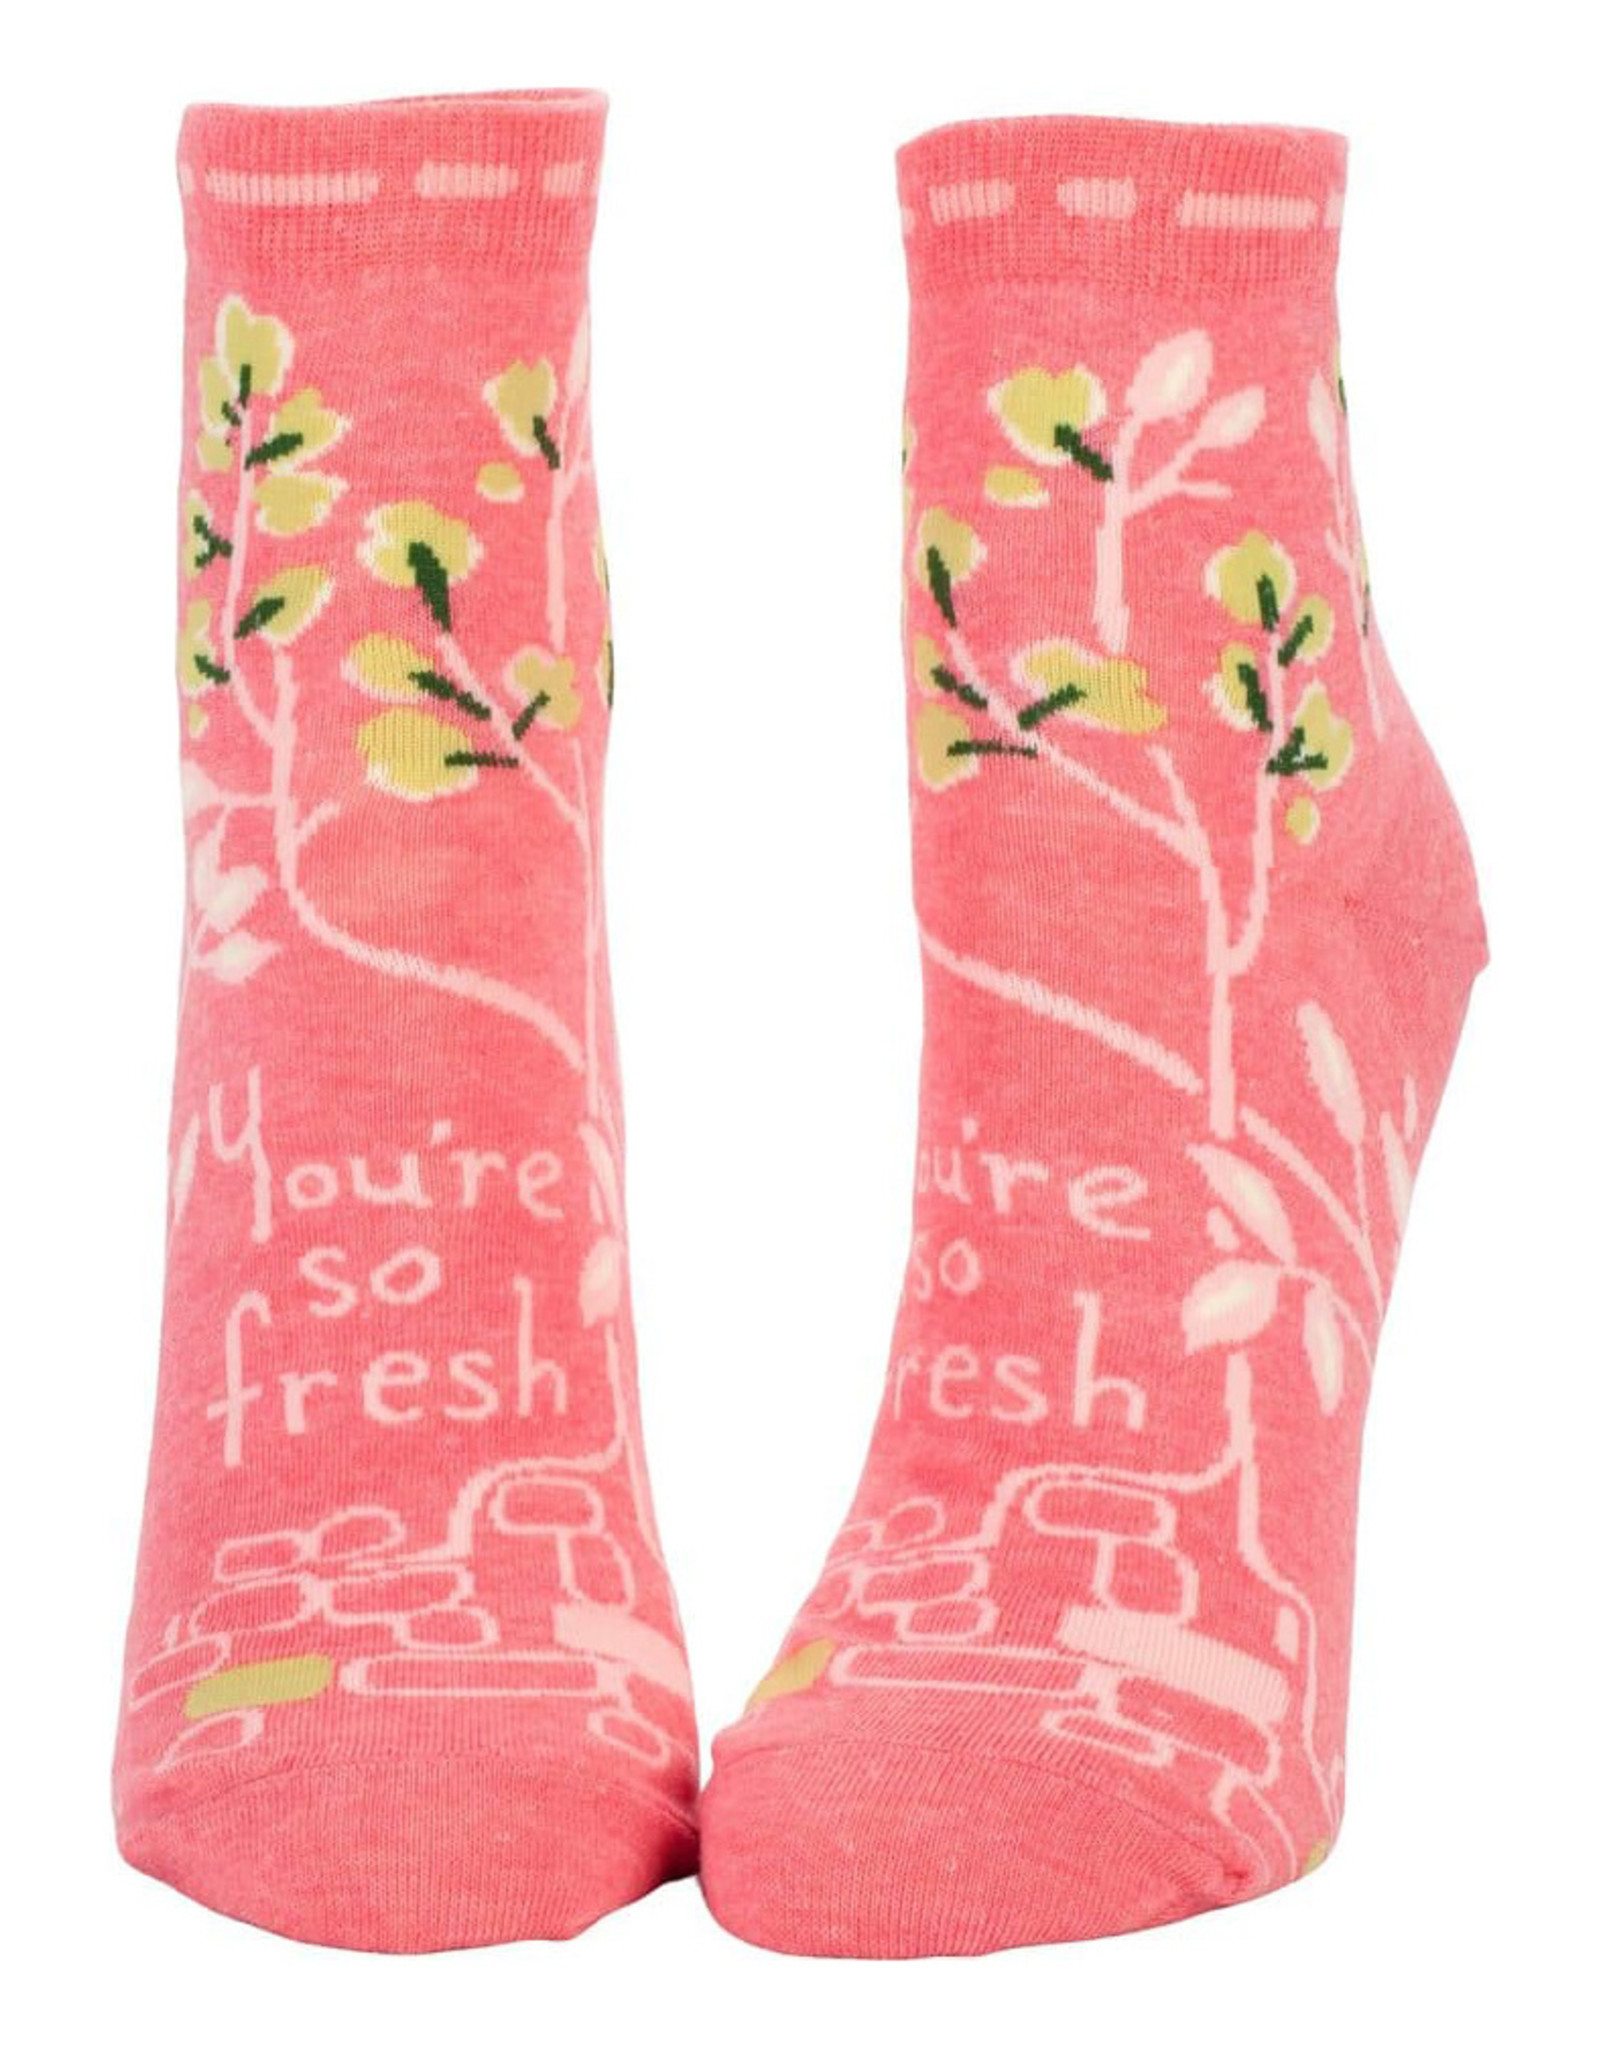 You're So Fresh Women's Ankle Socks